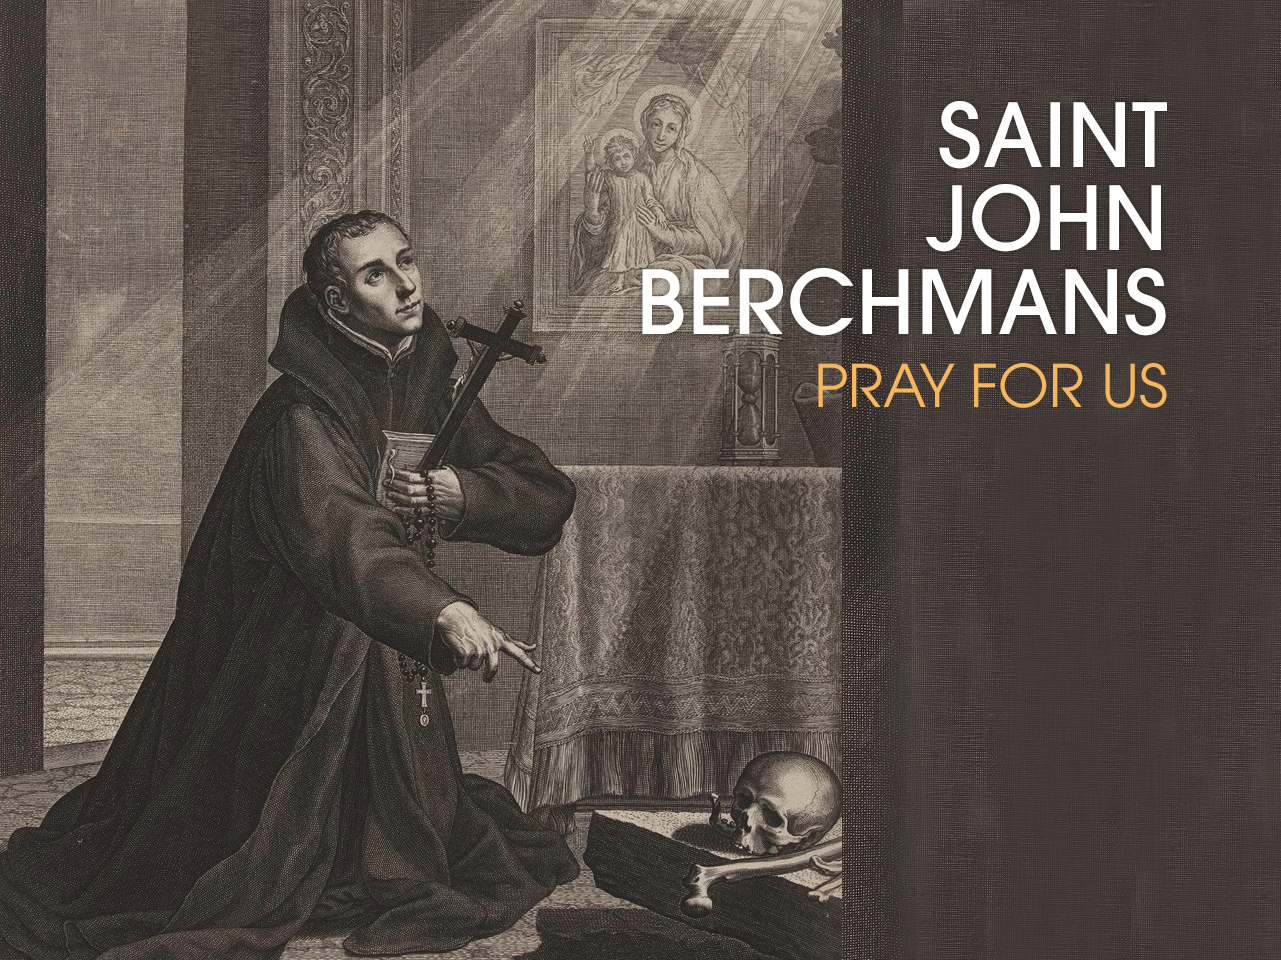 St. John Berchmans